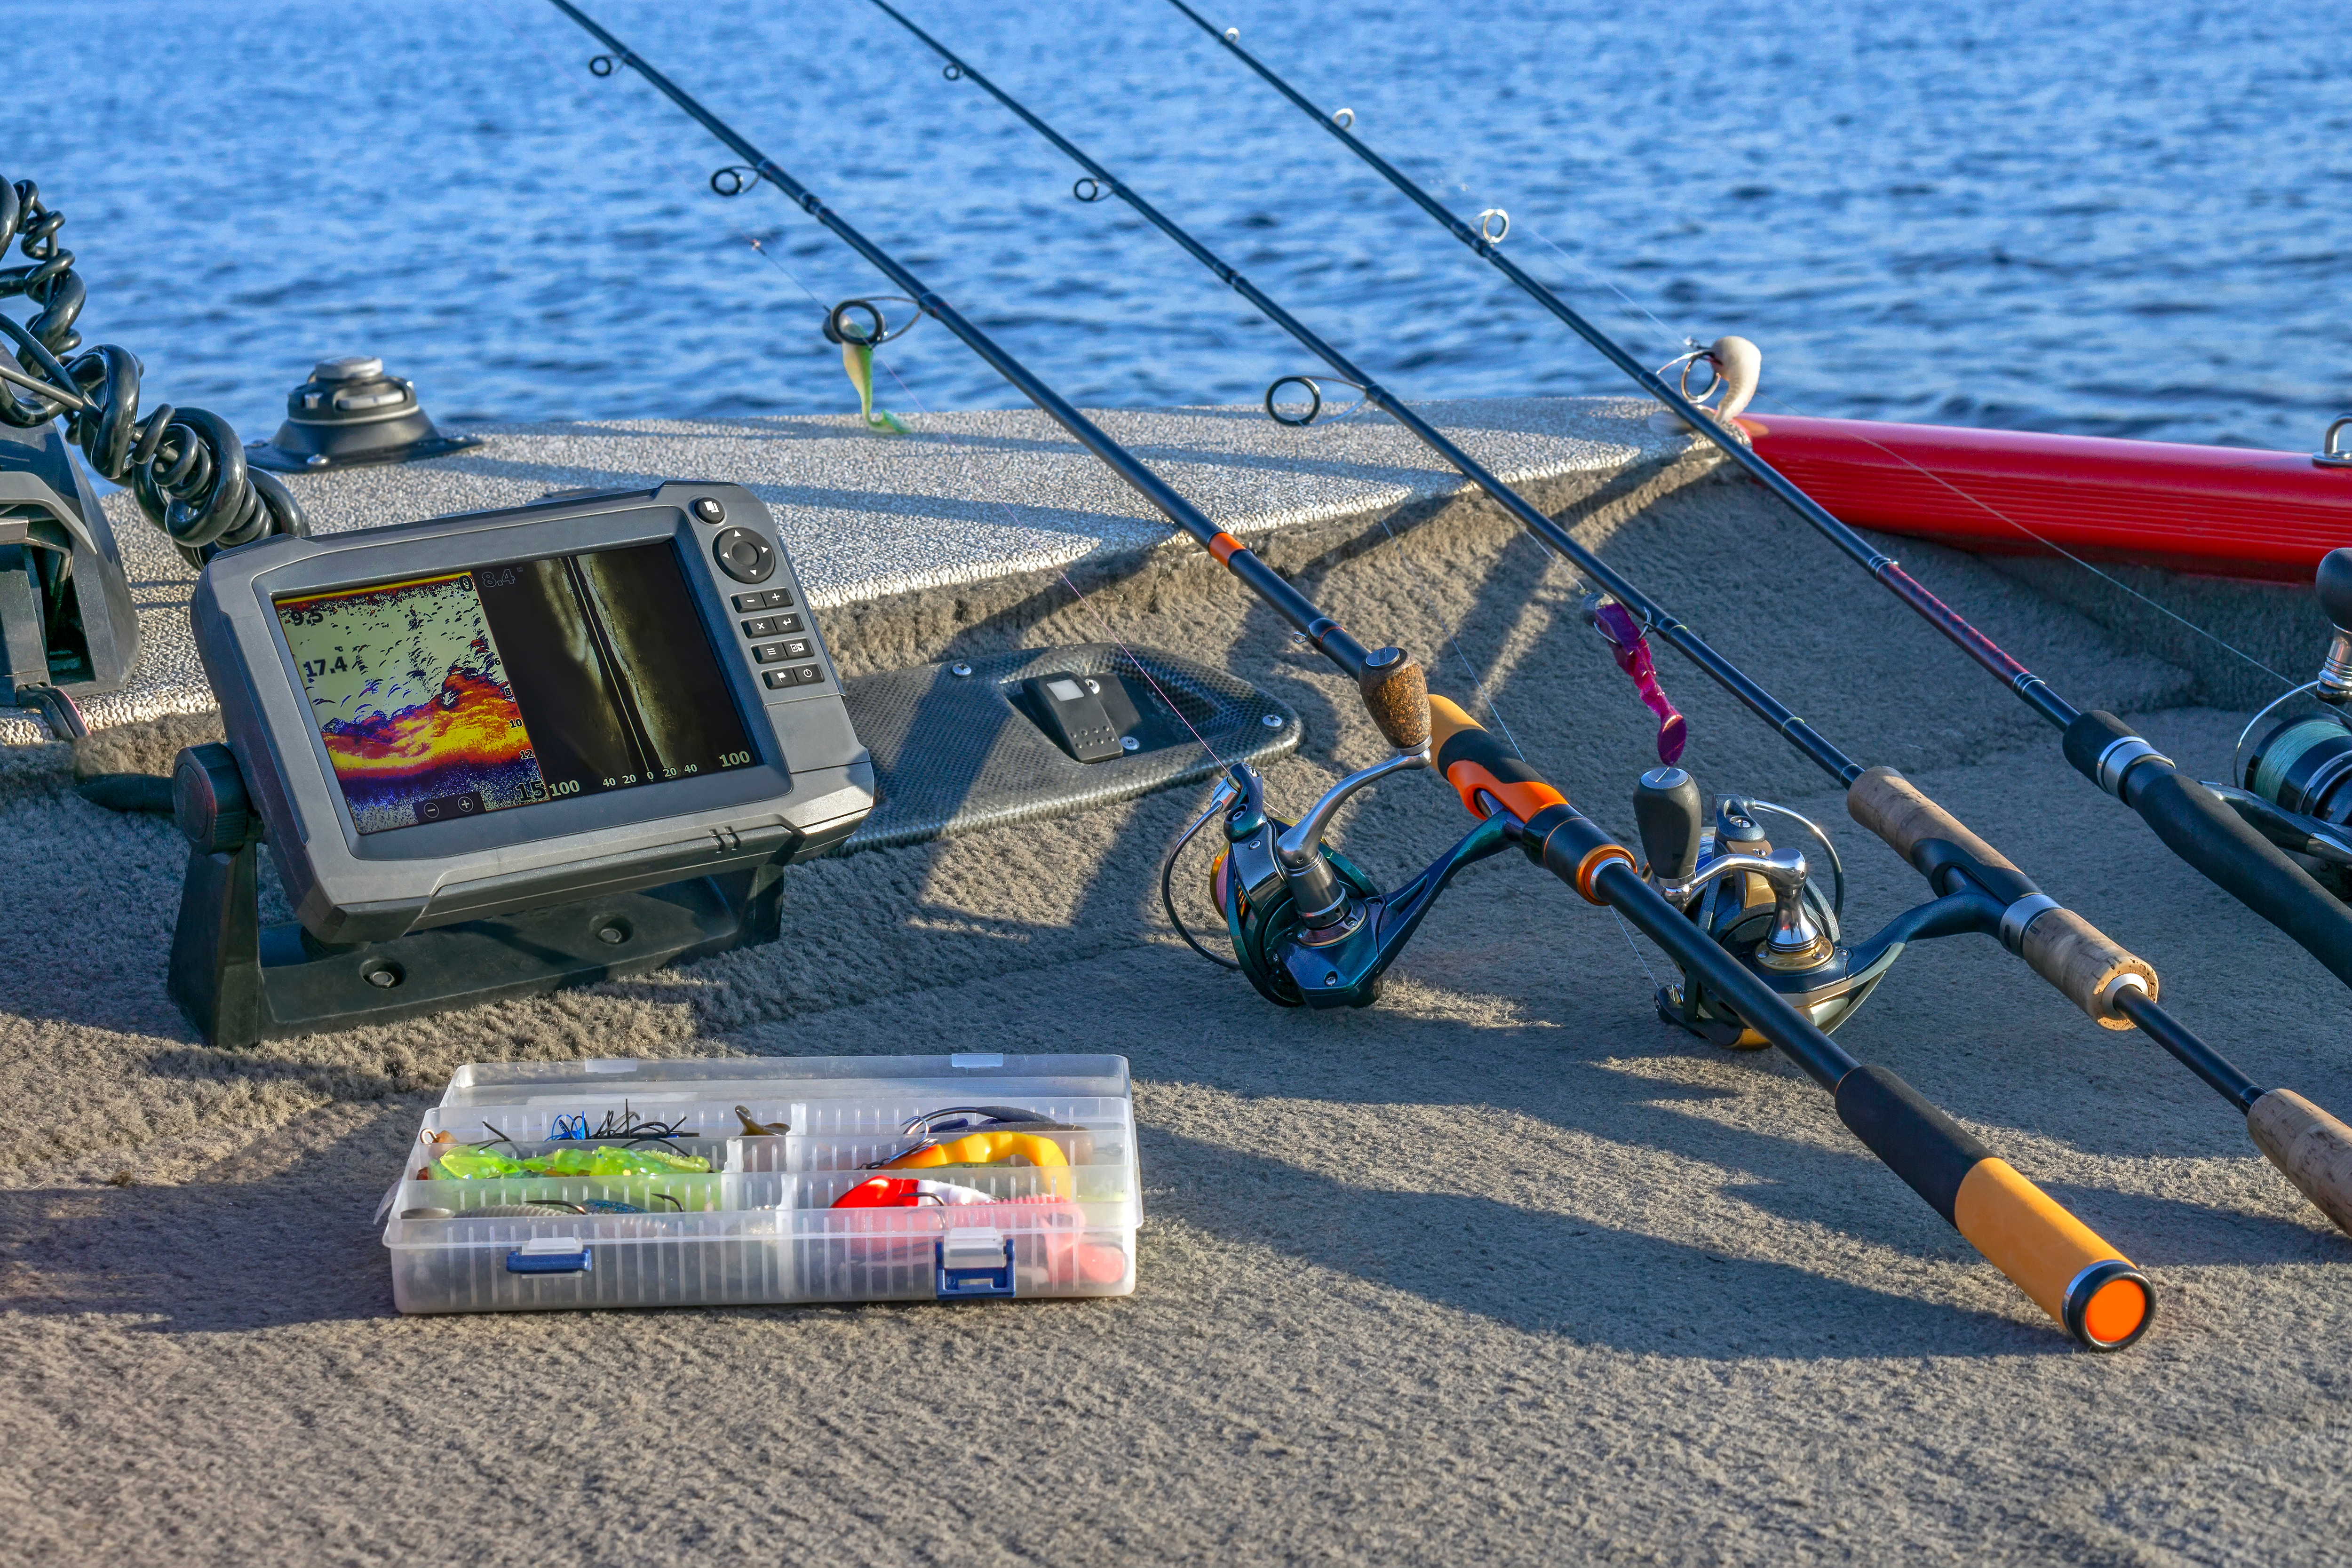 Fishfinder and Fishing Gear